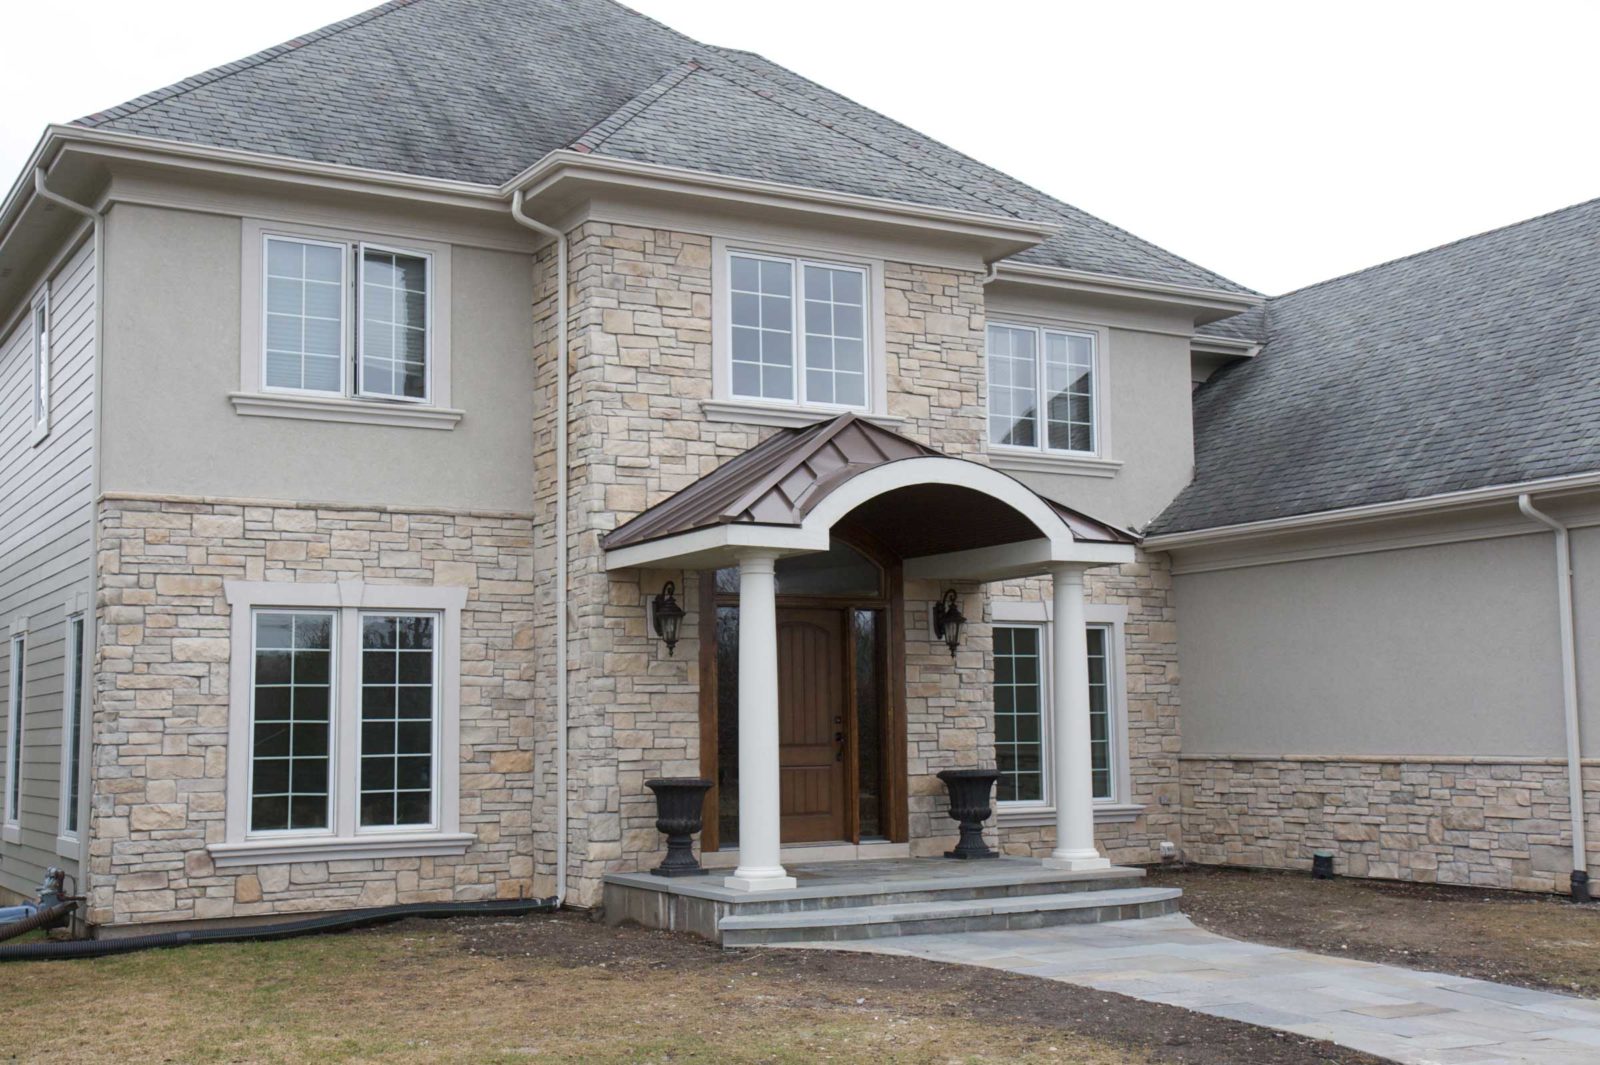 Exterior Stone Veneer Transform Your Home With Exterior Stone